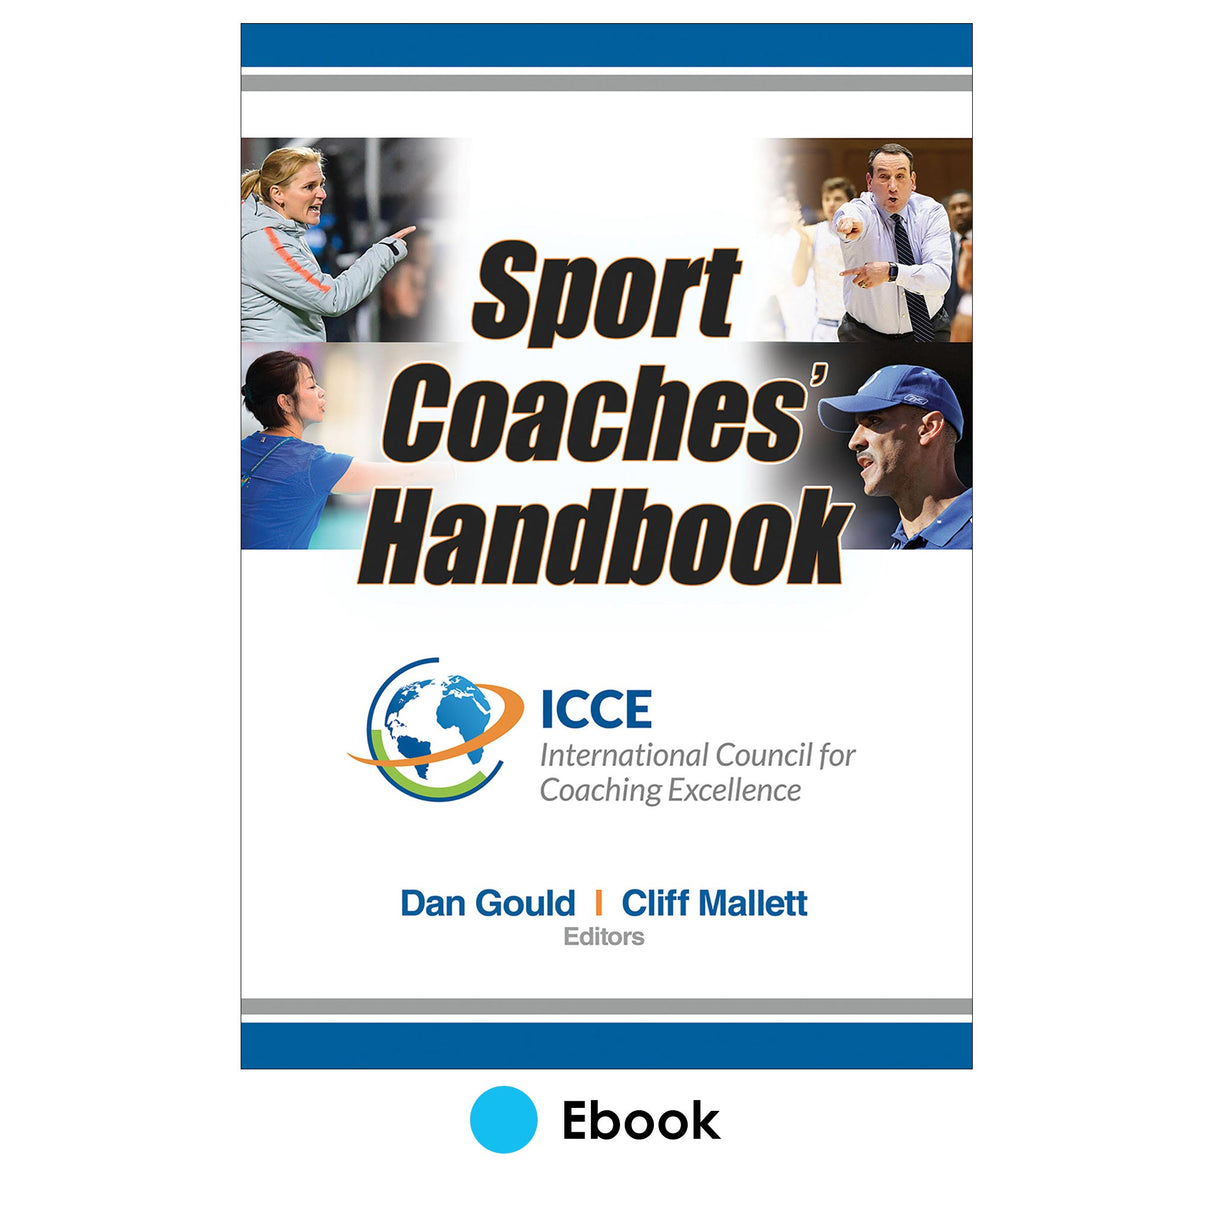 Sport Coaches’ Handbook epub